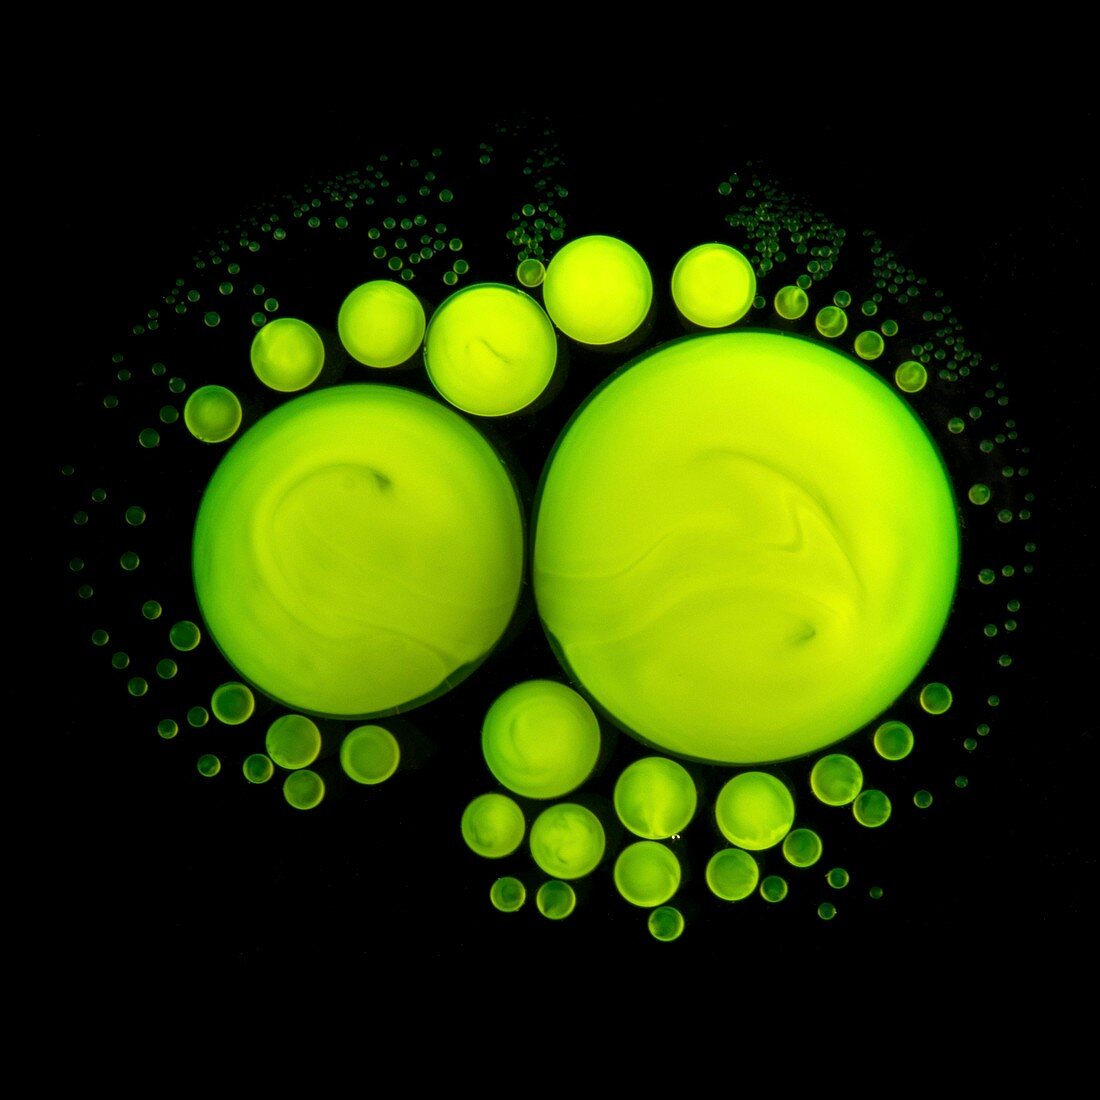 Green fluorescent droplets